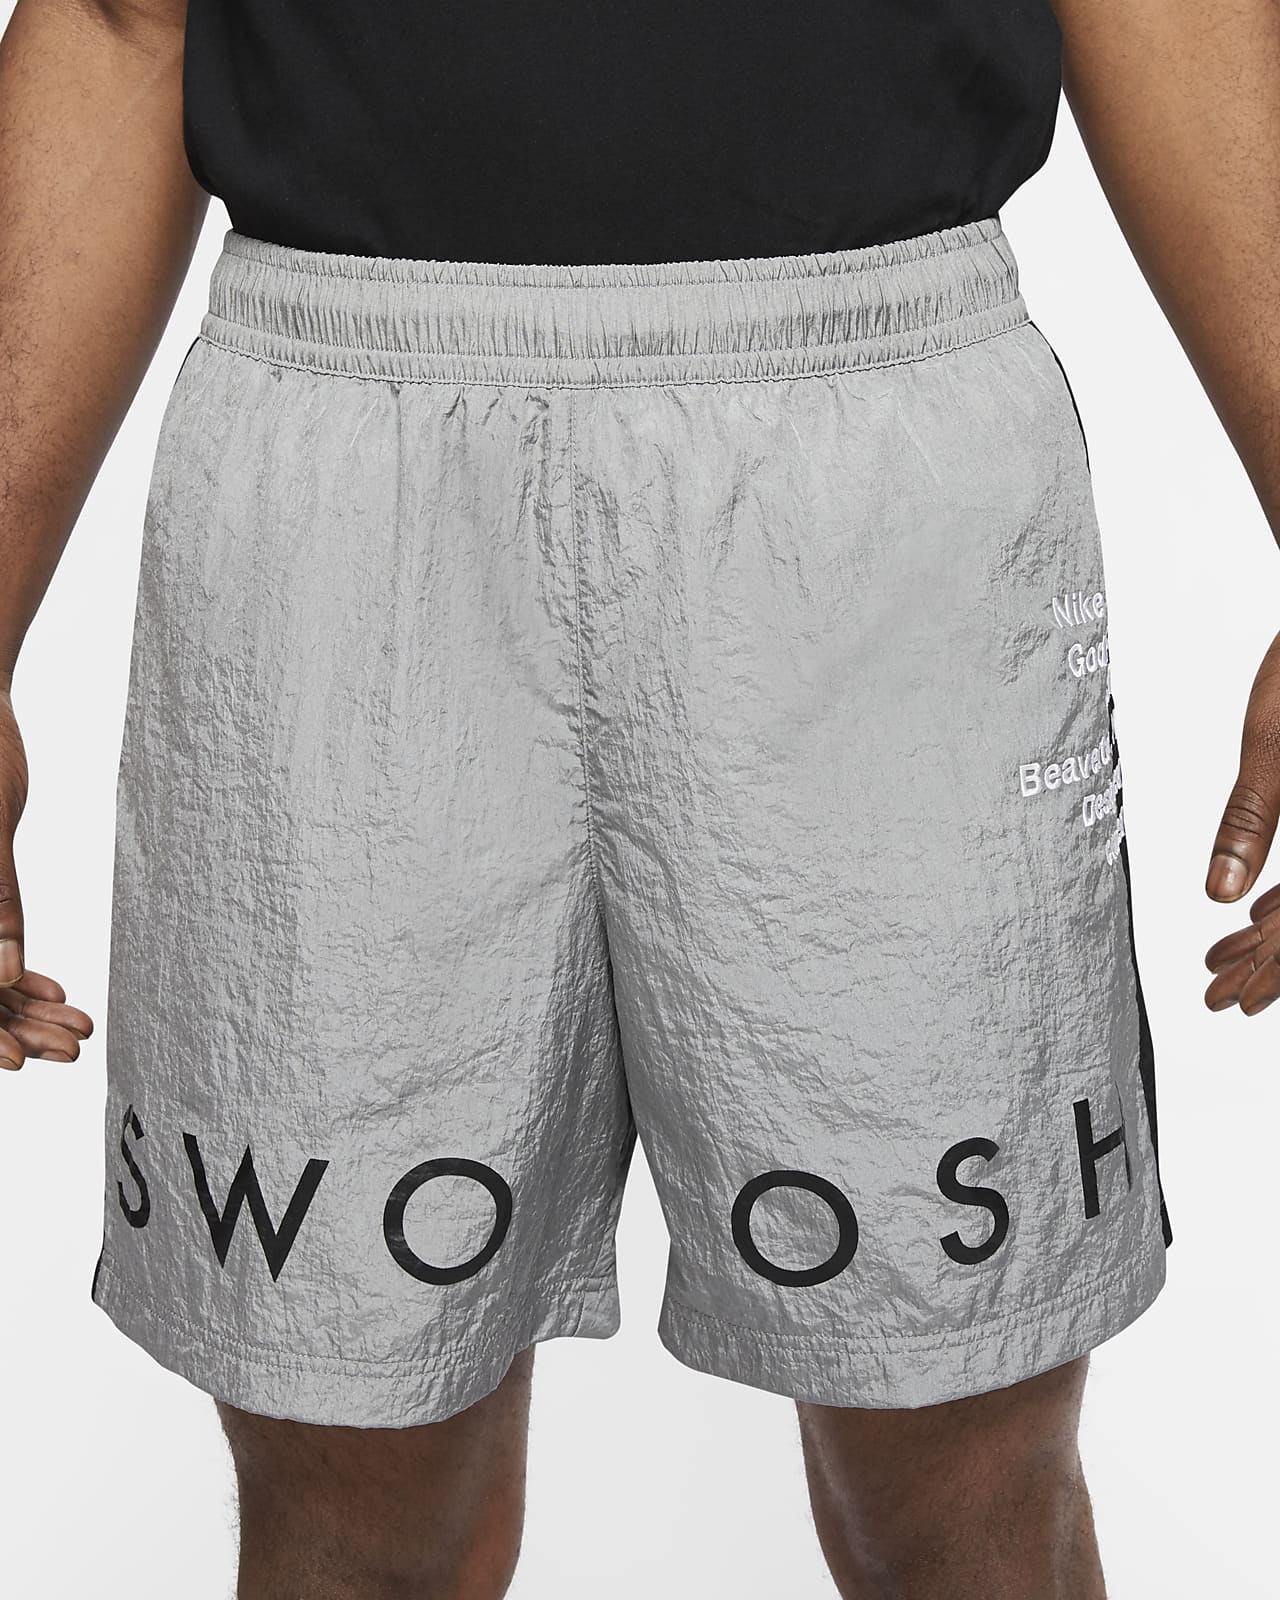 swoosh shorts nike